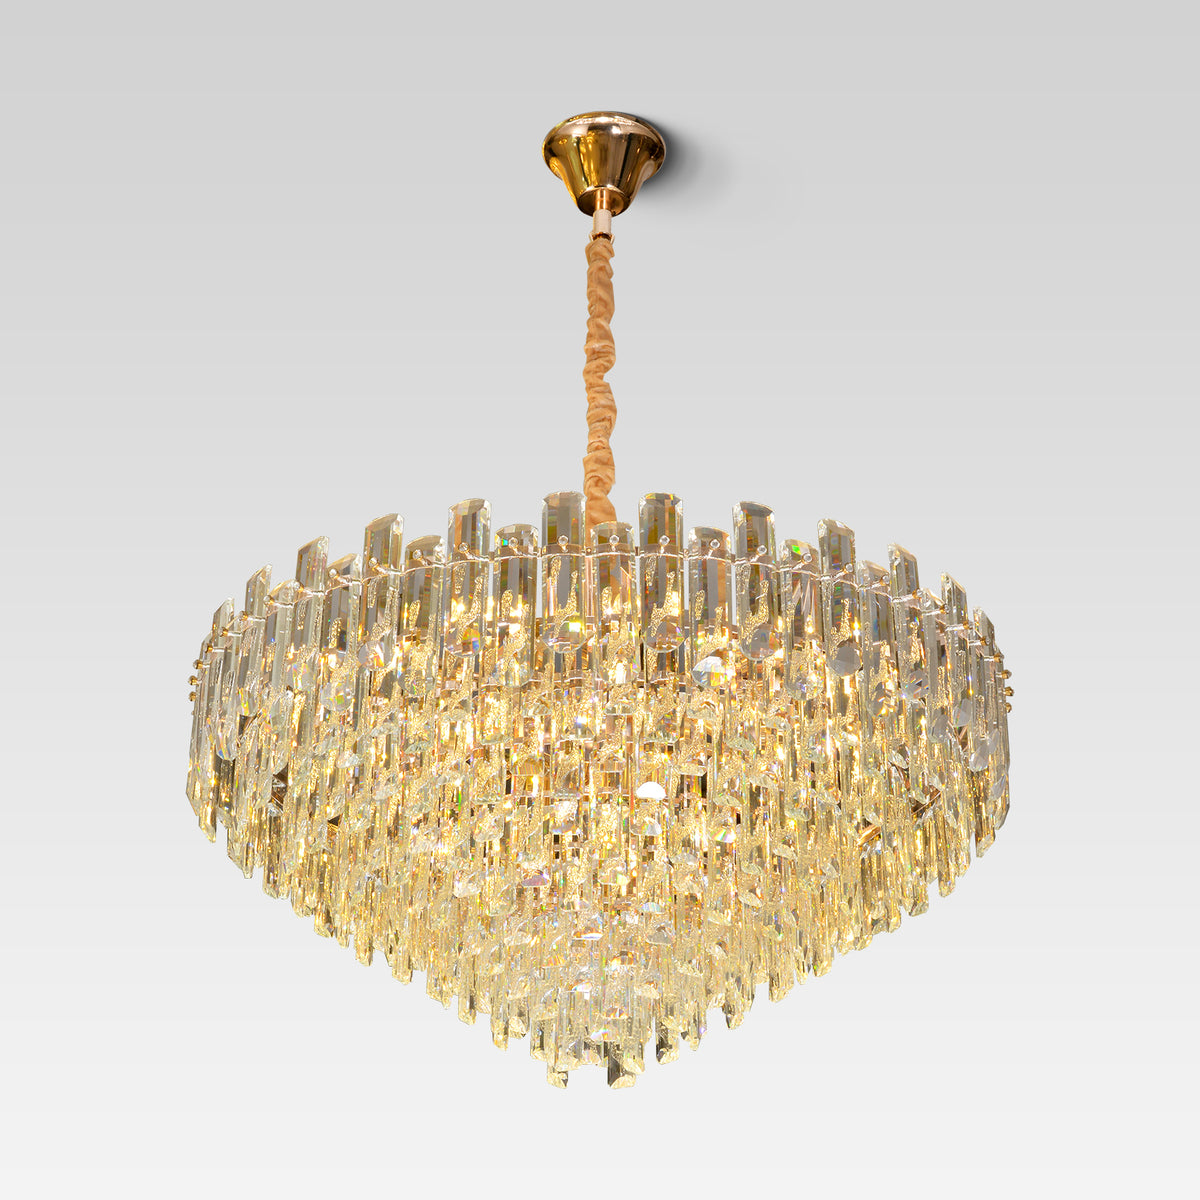 Lightingsea Modernist Gold Crystal Glass Chandelier For Interior Overhead Lighting